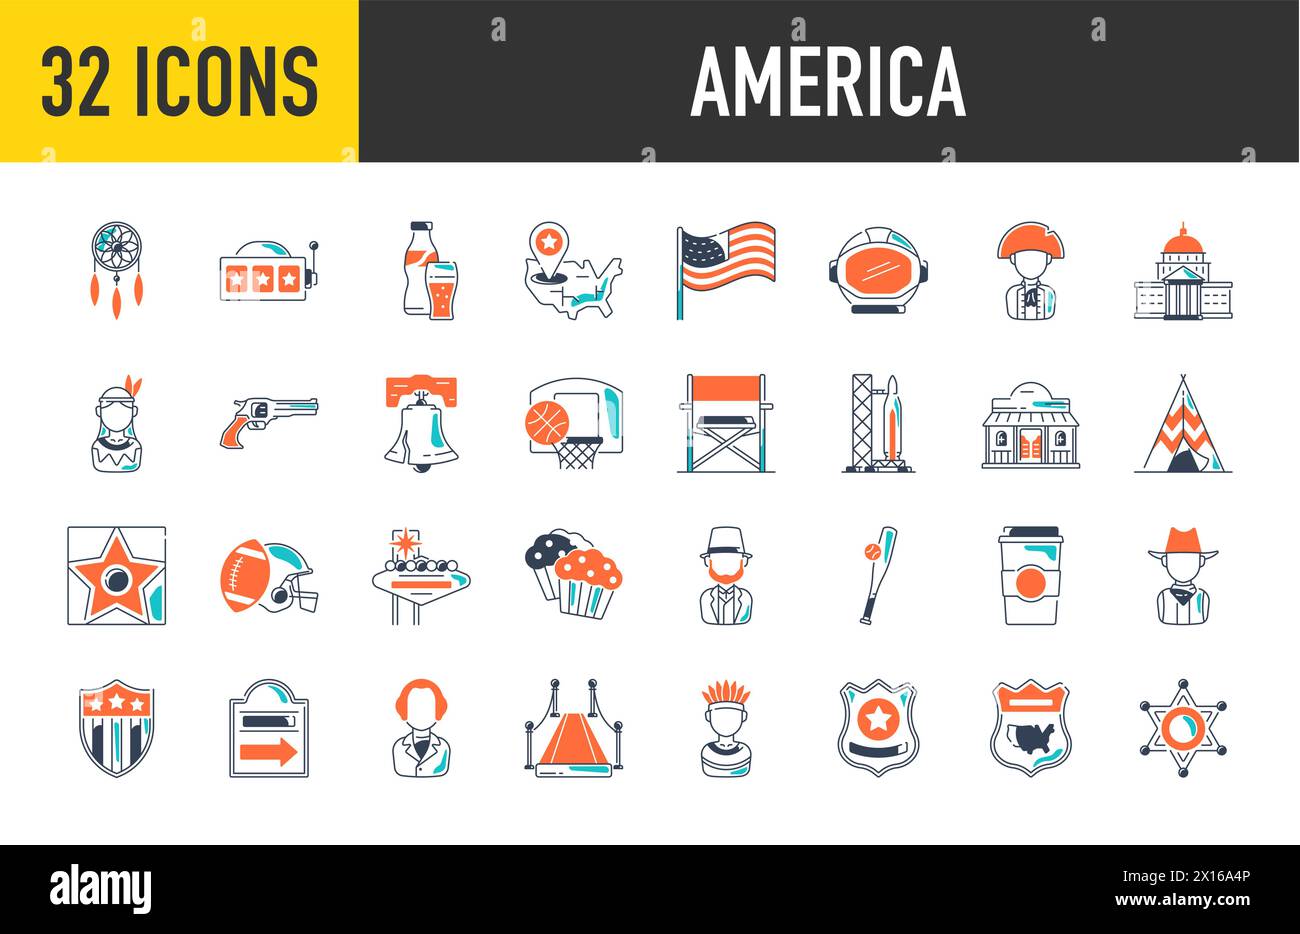 Amerikanische Ikonen, Kulturzeichen der USA, Traditionen Amerikas, Leben in den USA, National Objects of USA Vector Illustration. Stock Vektor